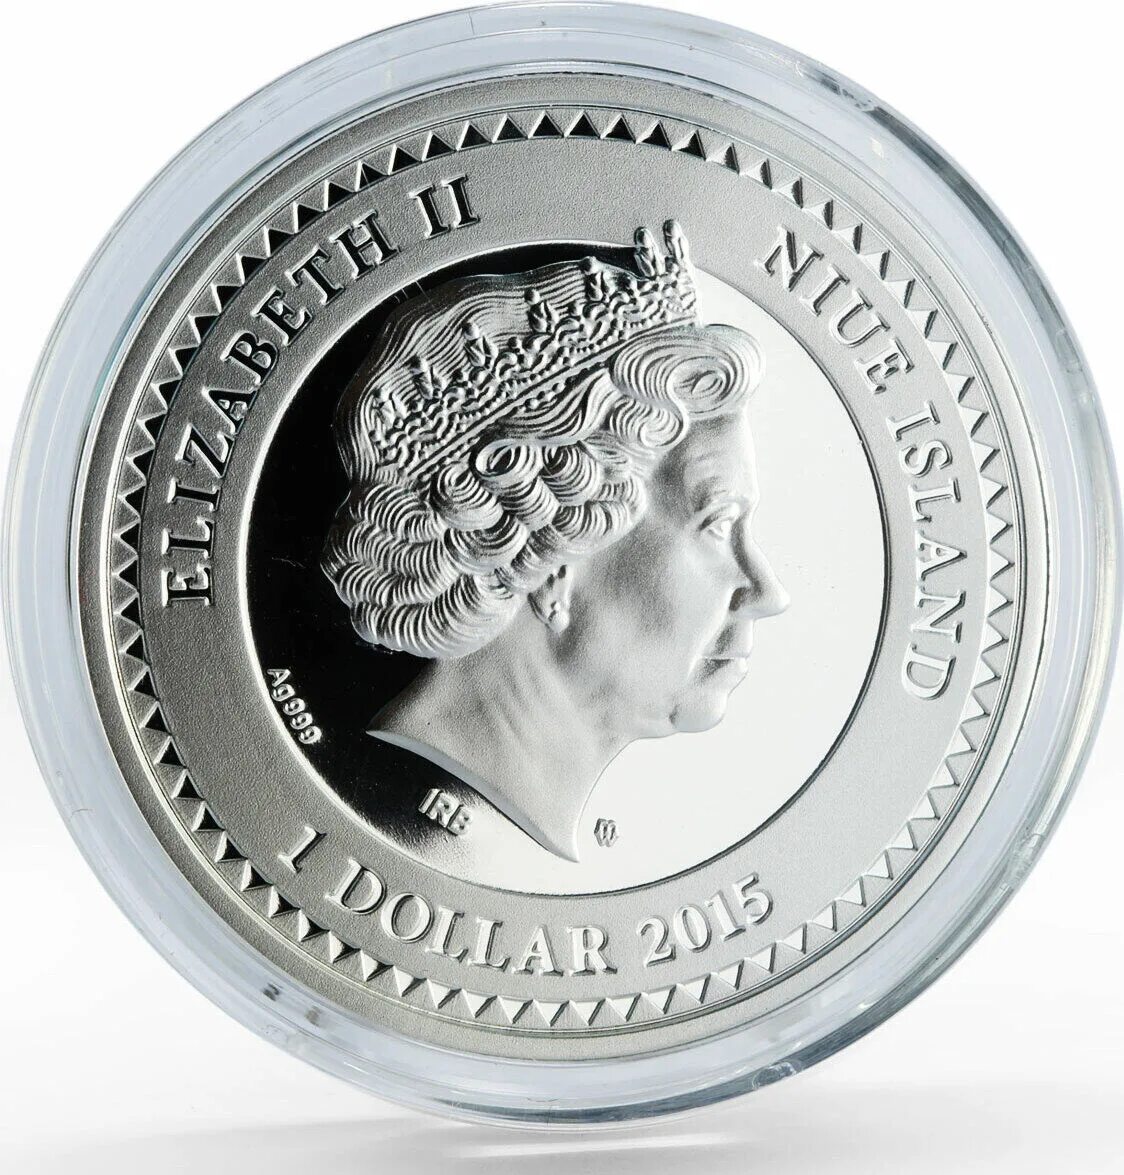 Hansa Niue Silver Coins. Ганзейские города монеты серебро Ниуэ 1 доллар. Niue Island 1 Dollar Silver 2016 32 mm 15.55g. 1 доллар ниуэ